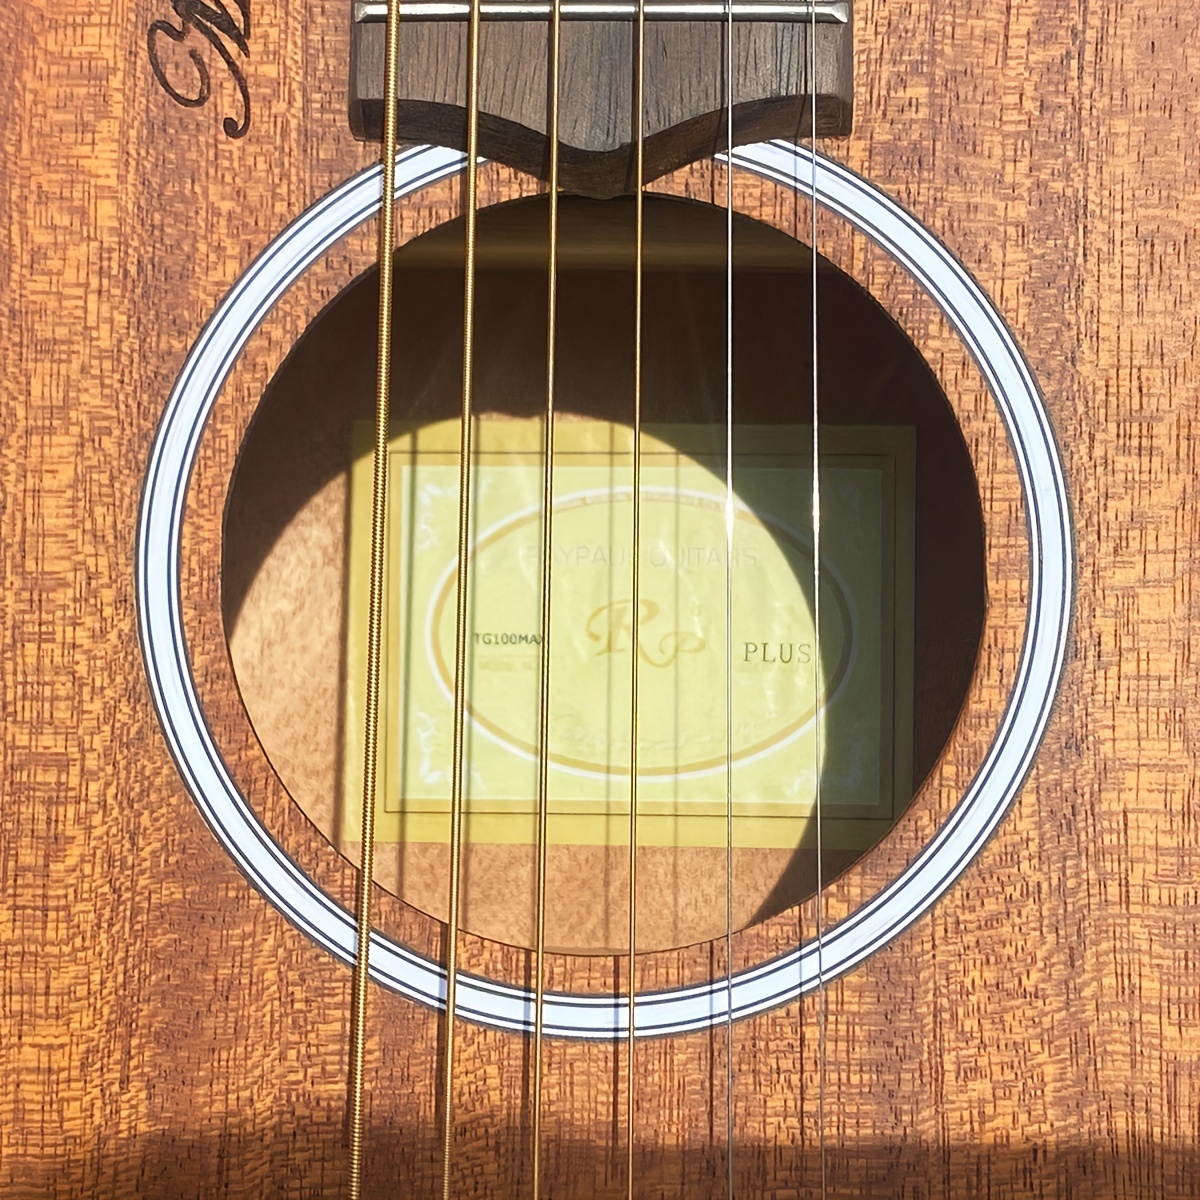 RP TG 100BASIC Guitare De Voyage Acoustique Ultra mini - Temu Canada